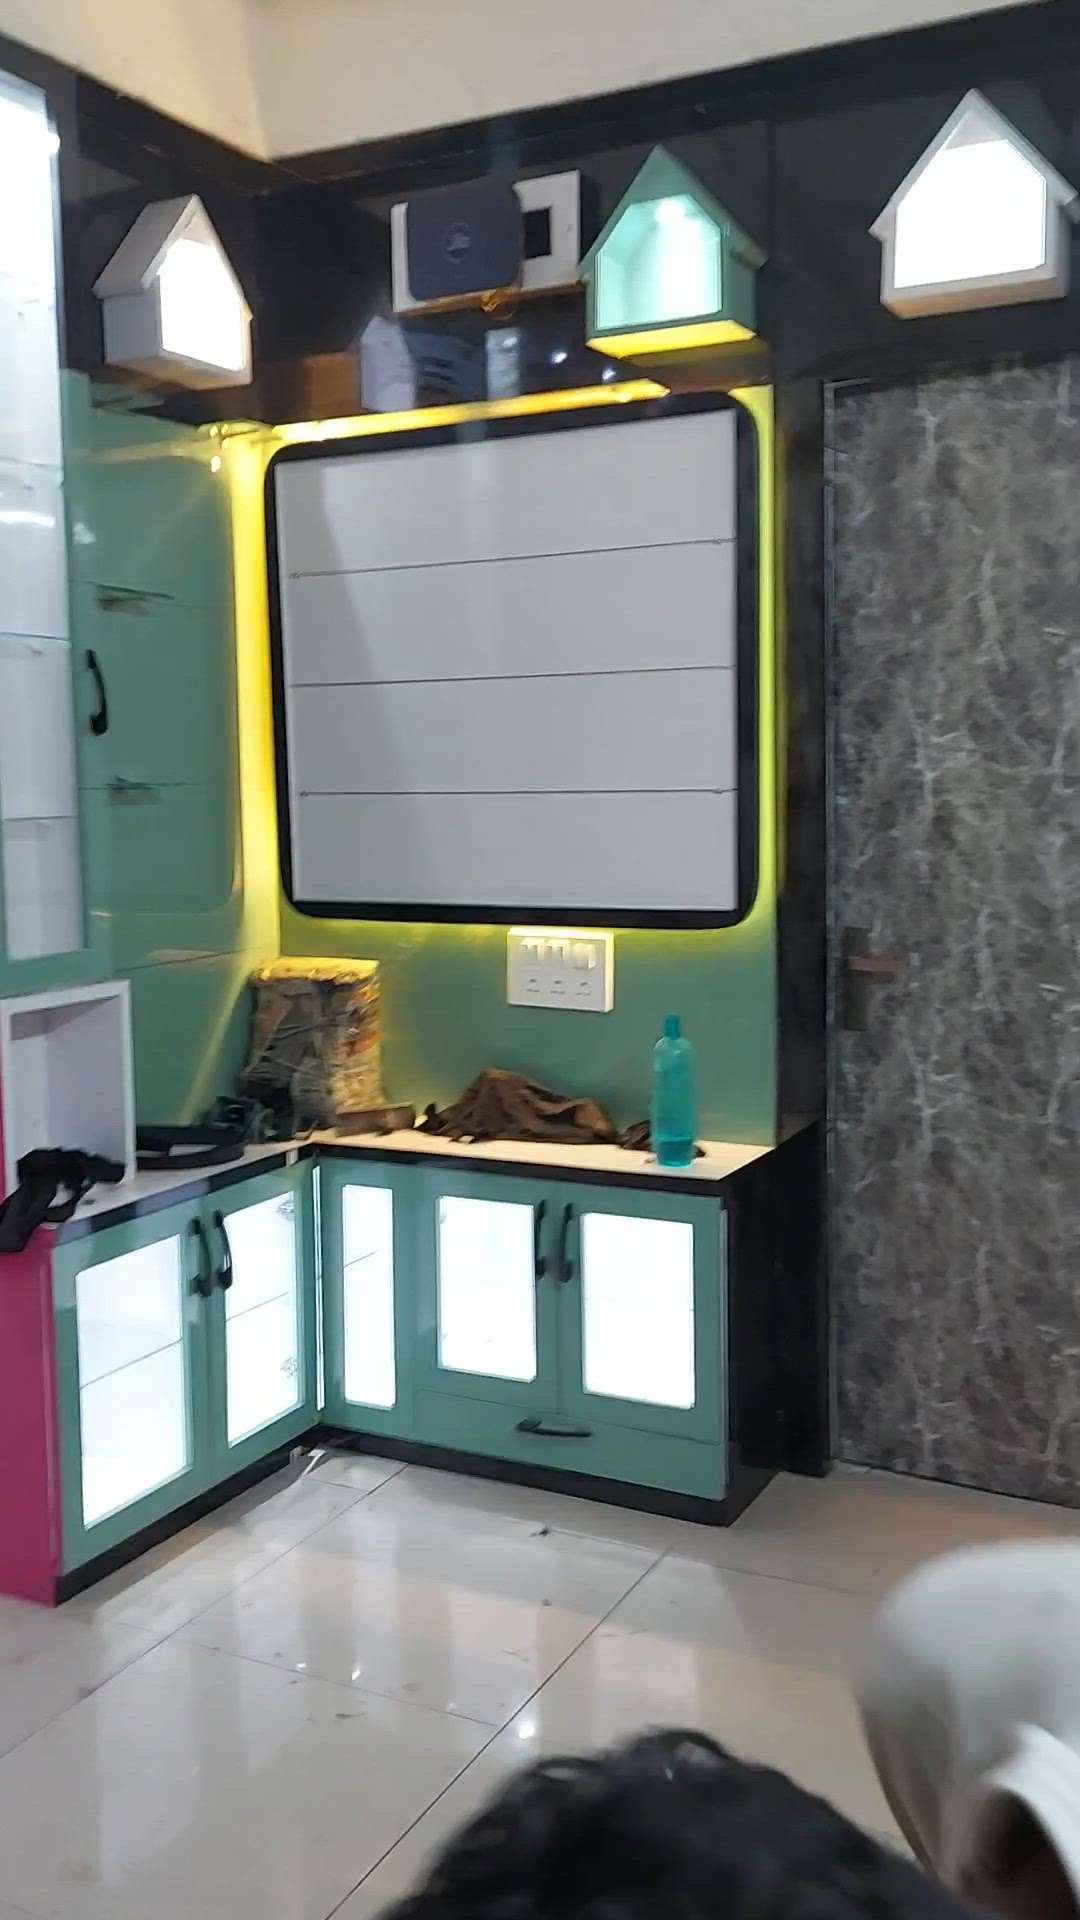 LCD PANNAL AND DOOR PILNING 
#ALI_YASSU_INTERIOR